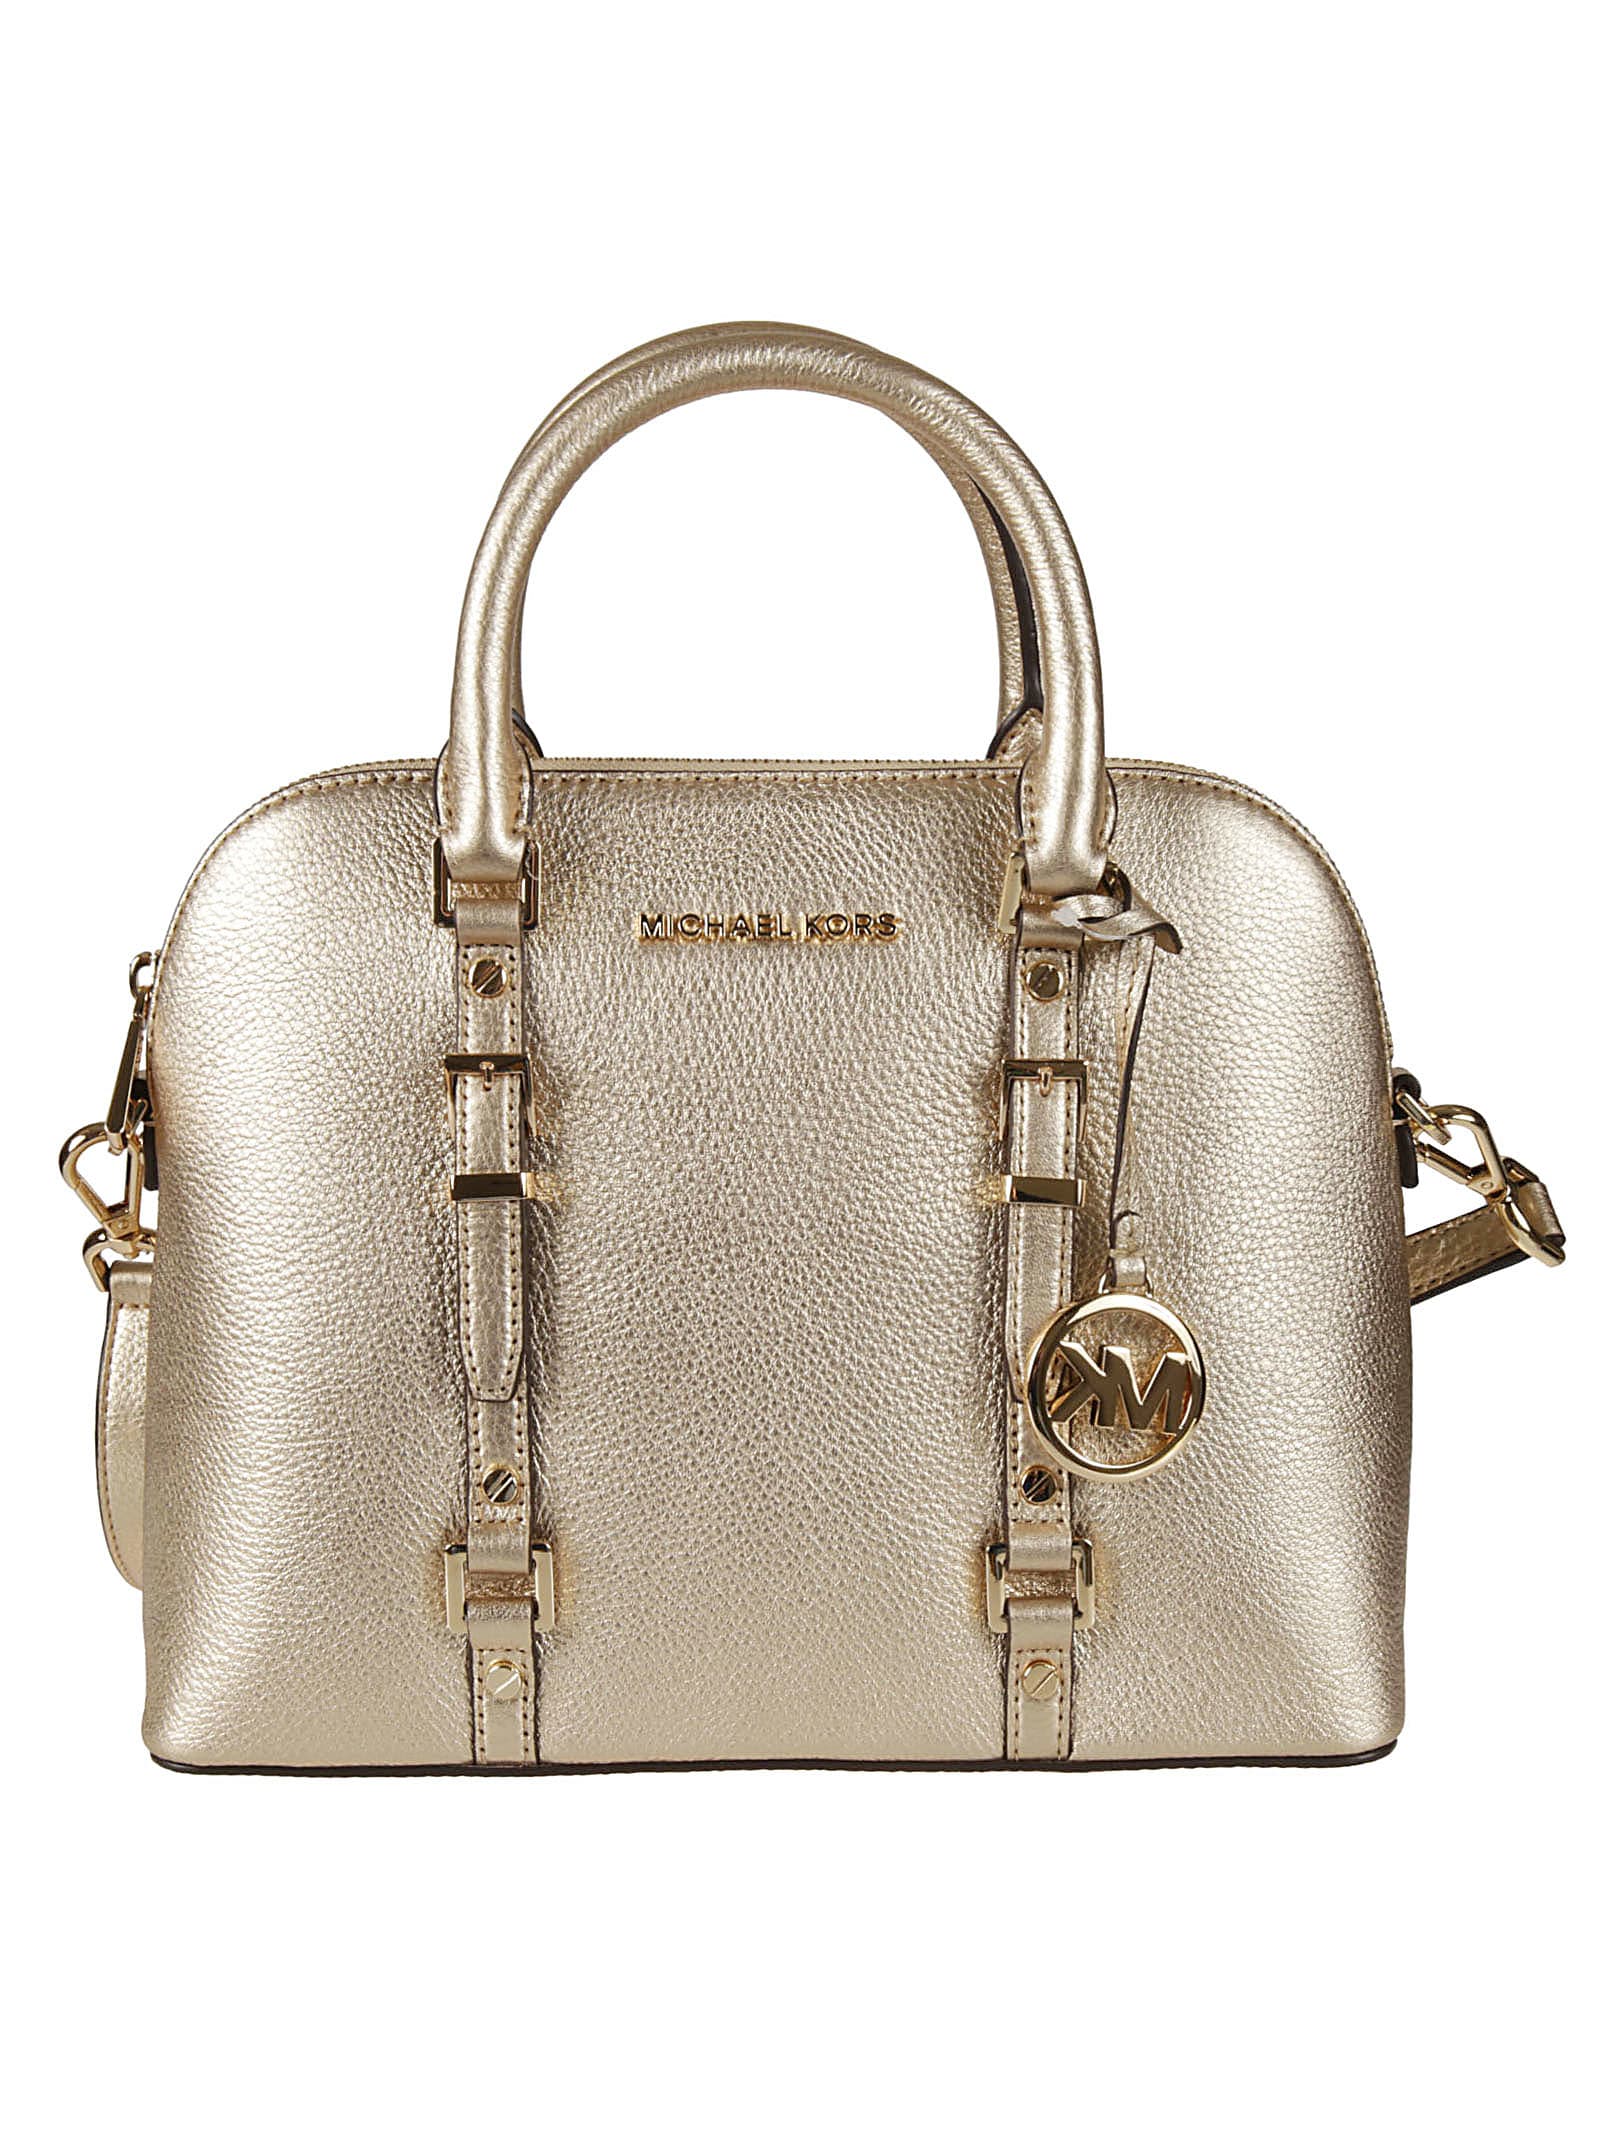 Michael Kors Bedford Legacy Ladies Medium Gold Leather Tote Bag ...